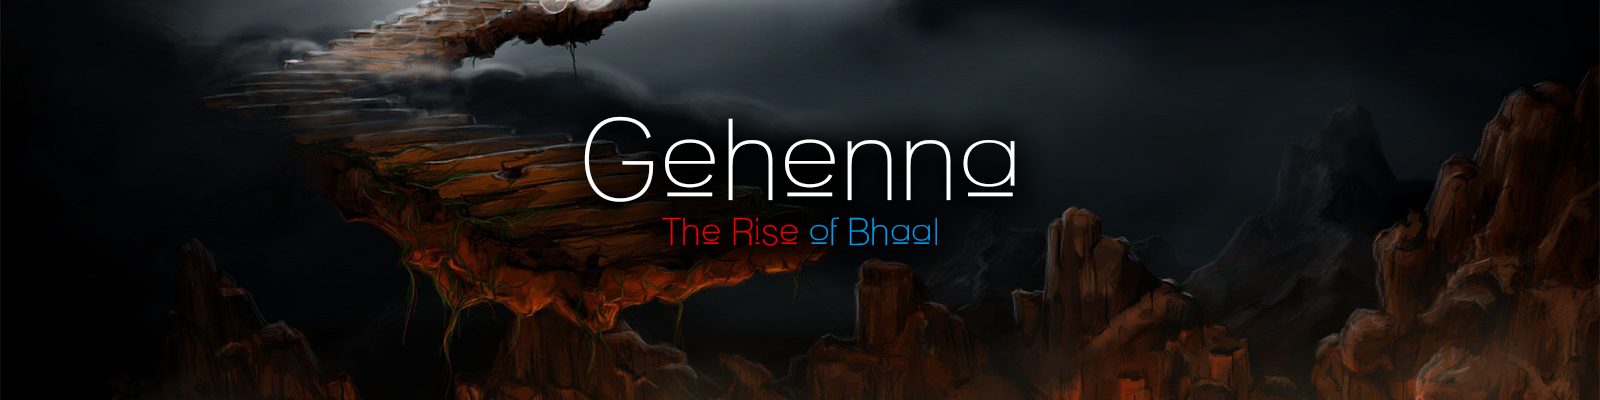 Vegeta-sama - Gehenna: The Rise of Bhaal - Version 0.4.3 Win